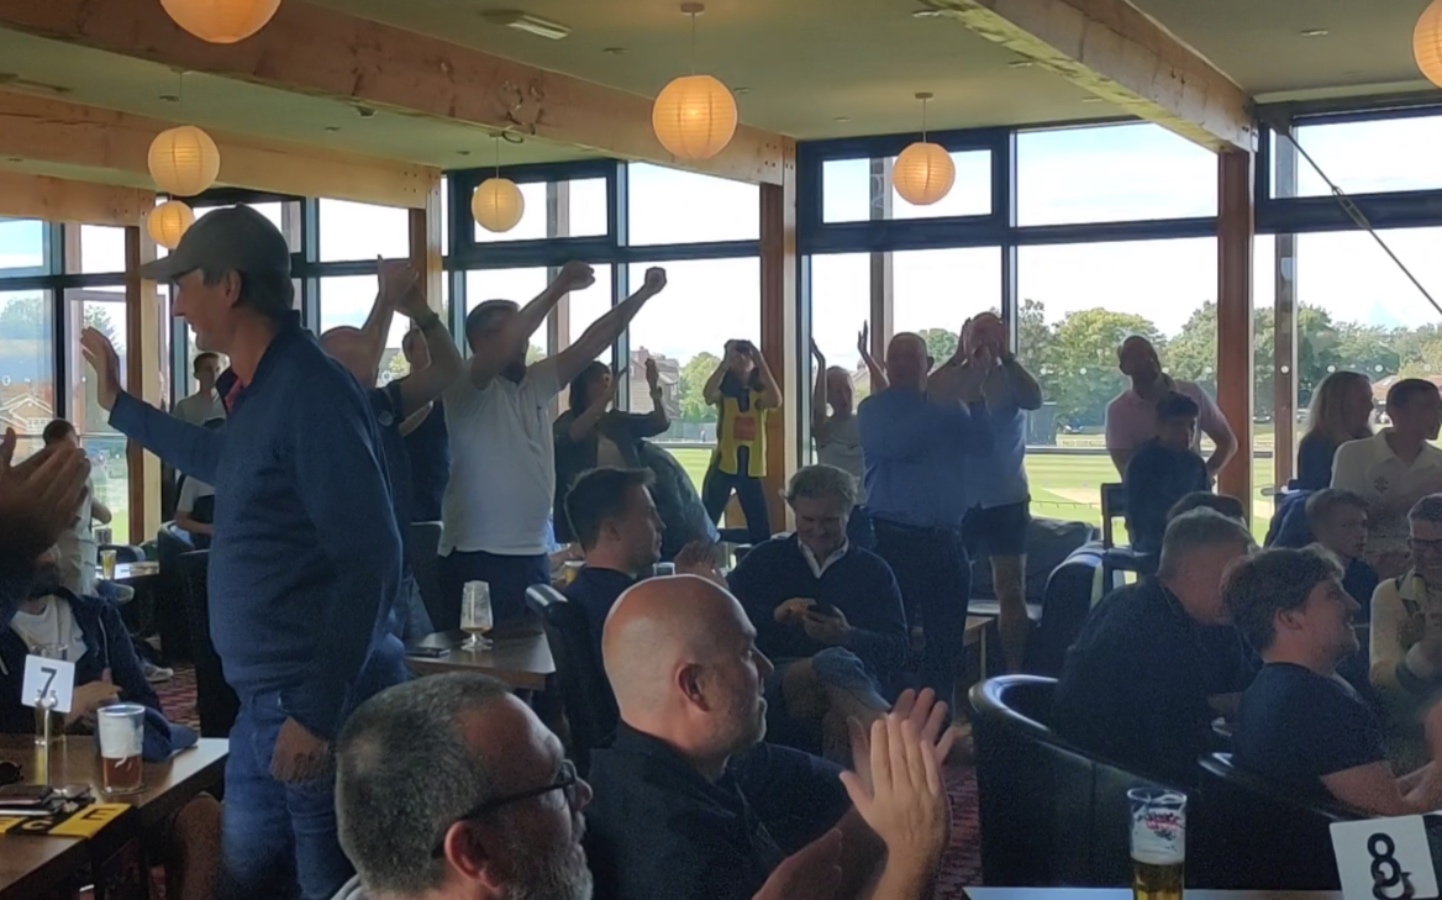 Harrogate Town fans at Harrogate Cricket Club celebrate the club's promotion.